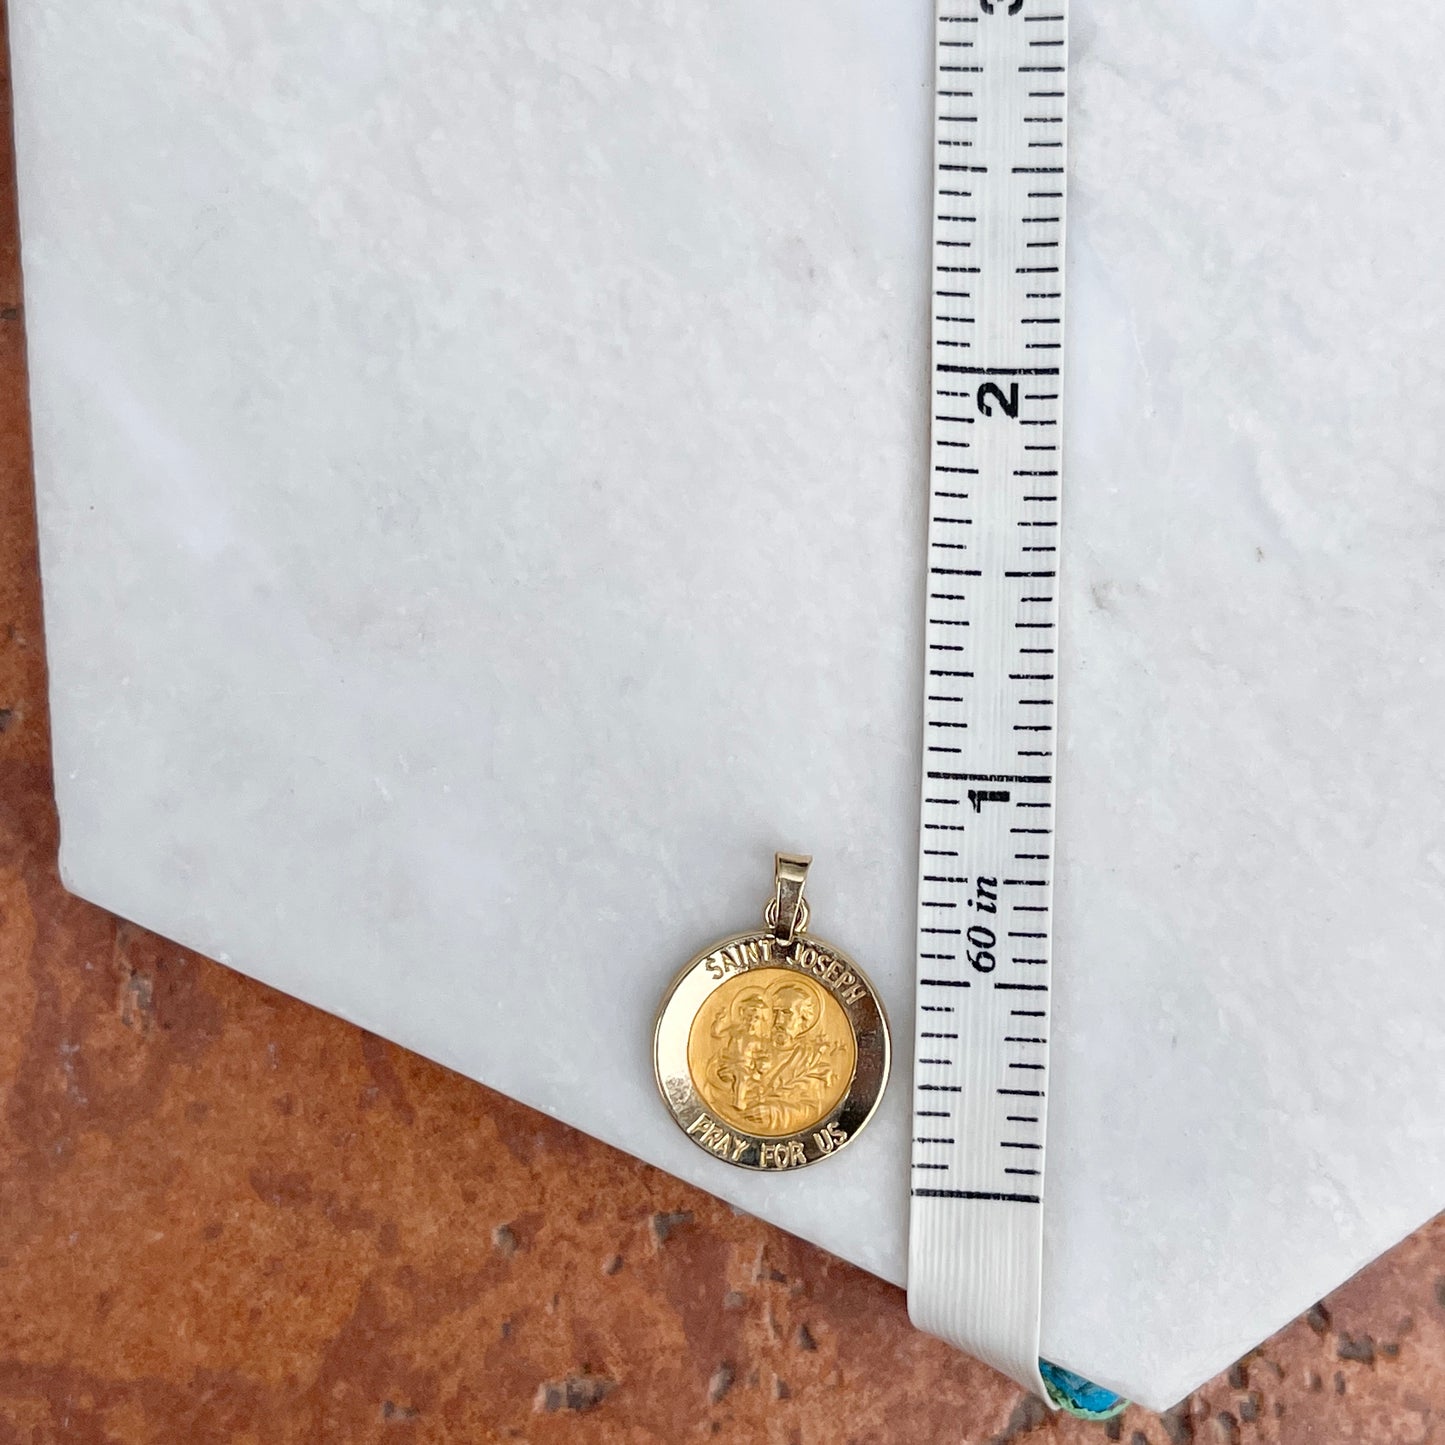 14KT Yellow Gold Satin Saint Joseph Round Medal Pendant